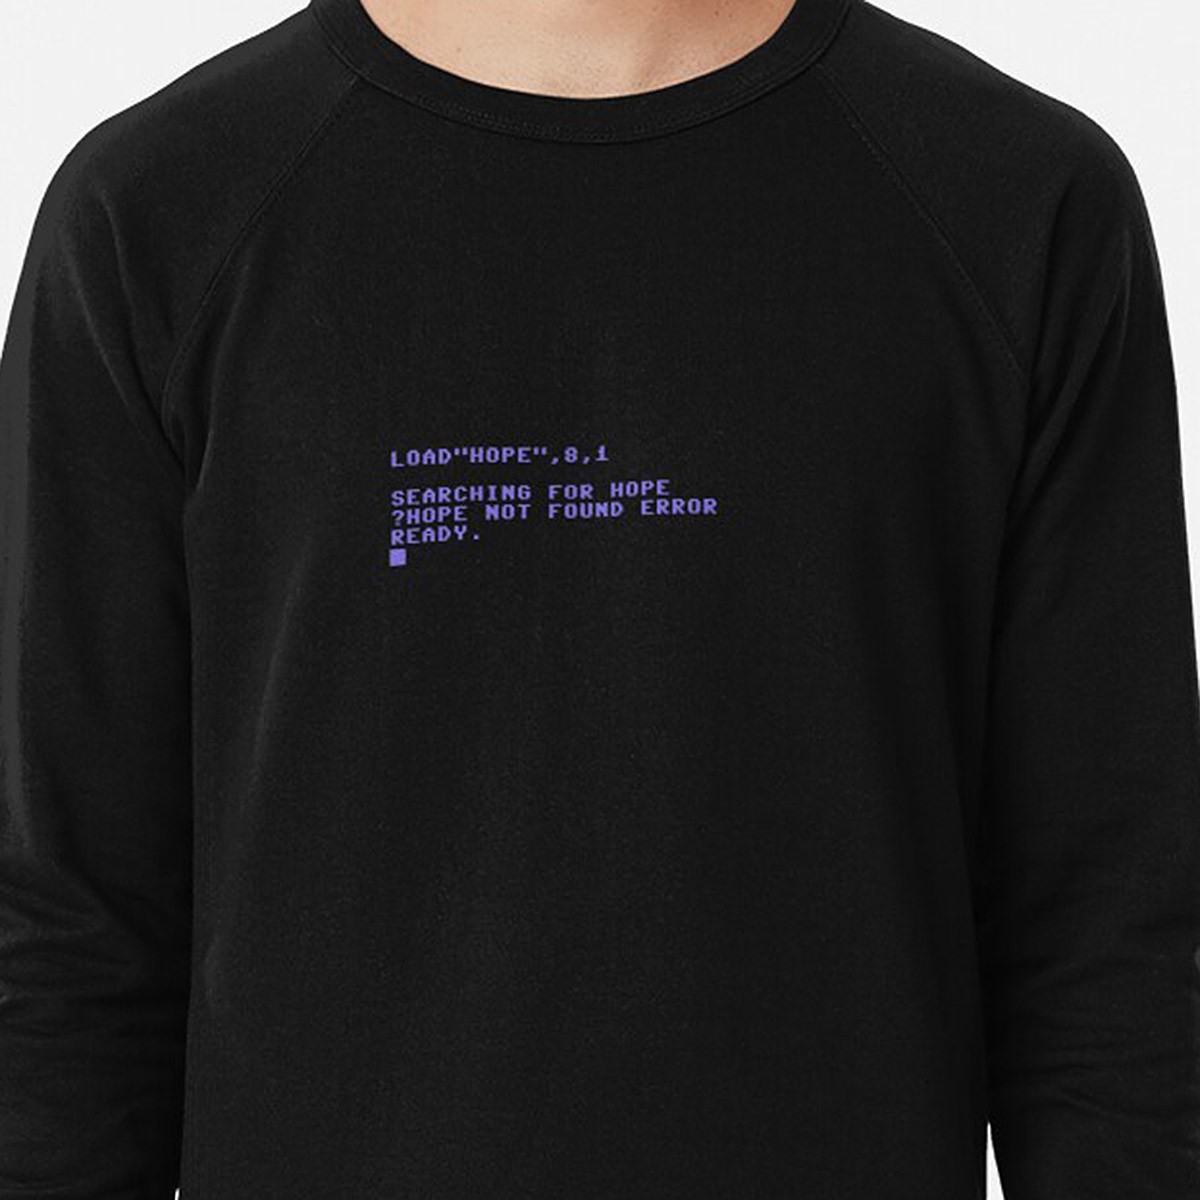 Commodore C64 Load Error - Hope Not Found Lightweight Sweatshirt by NTK Apparel